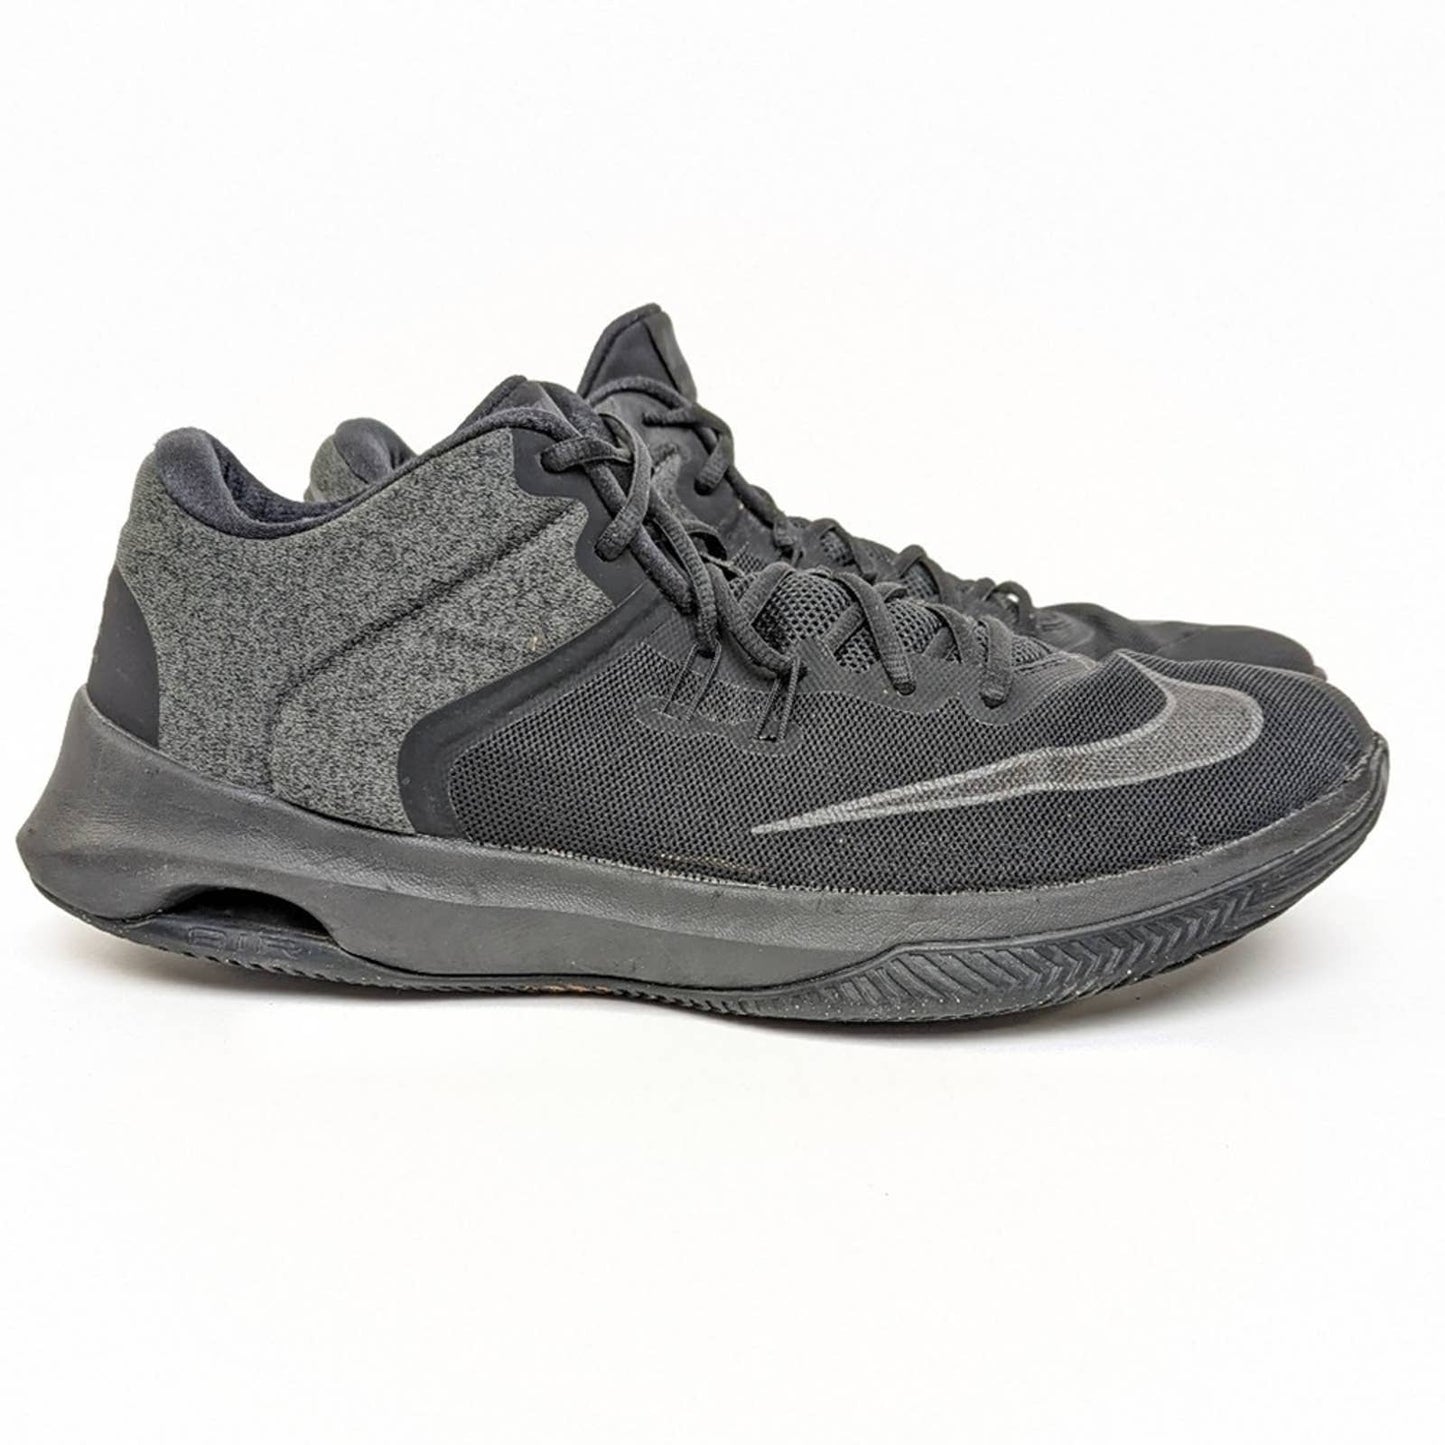 Nike Air Versitile II NBK Triple Black Basketball Shoes - 14